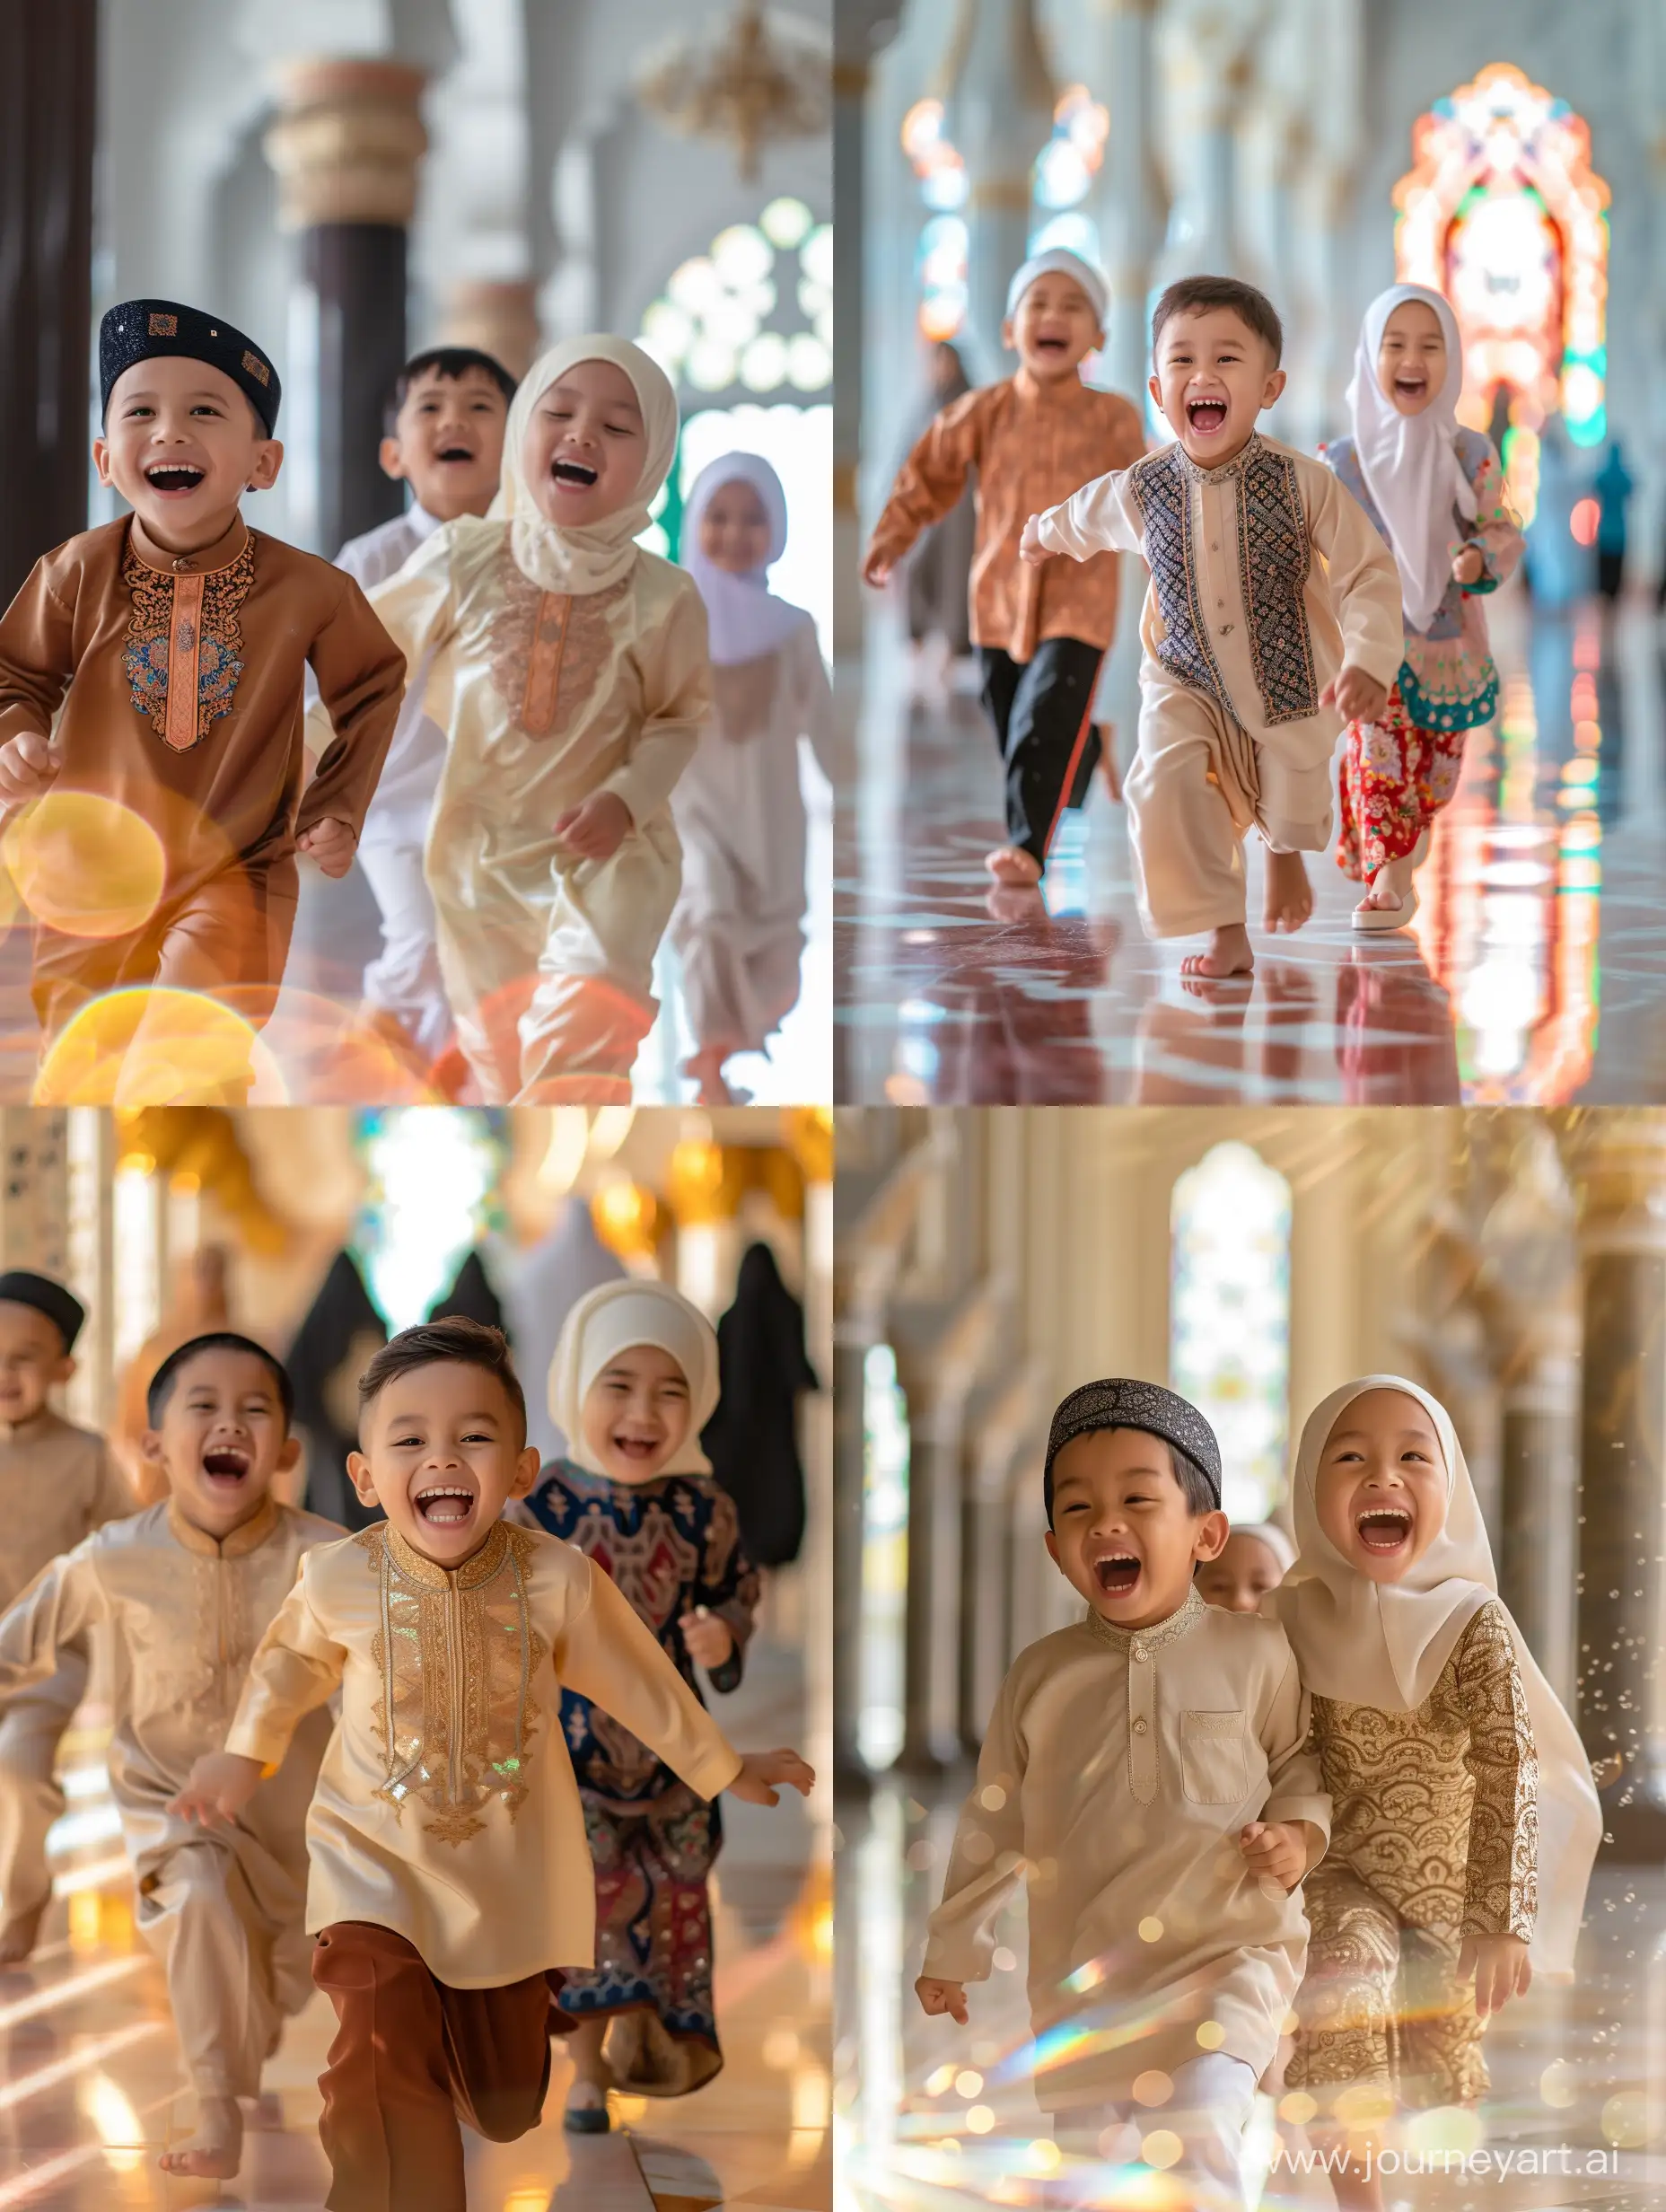 Joyful-Children-Running-in-Mosque-Wearing-Traditional-Malay-Attire